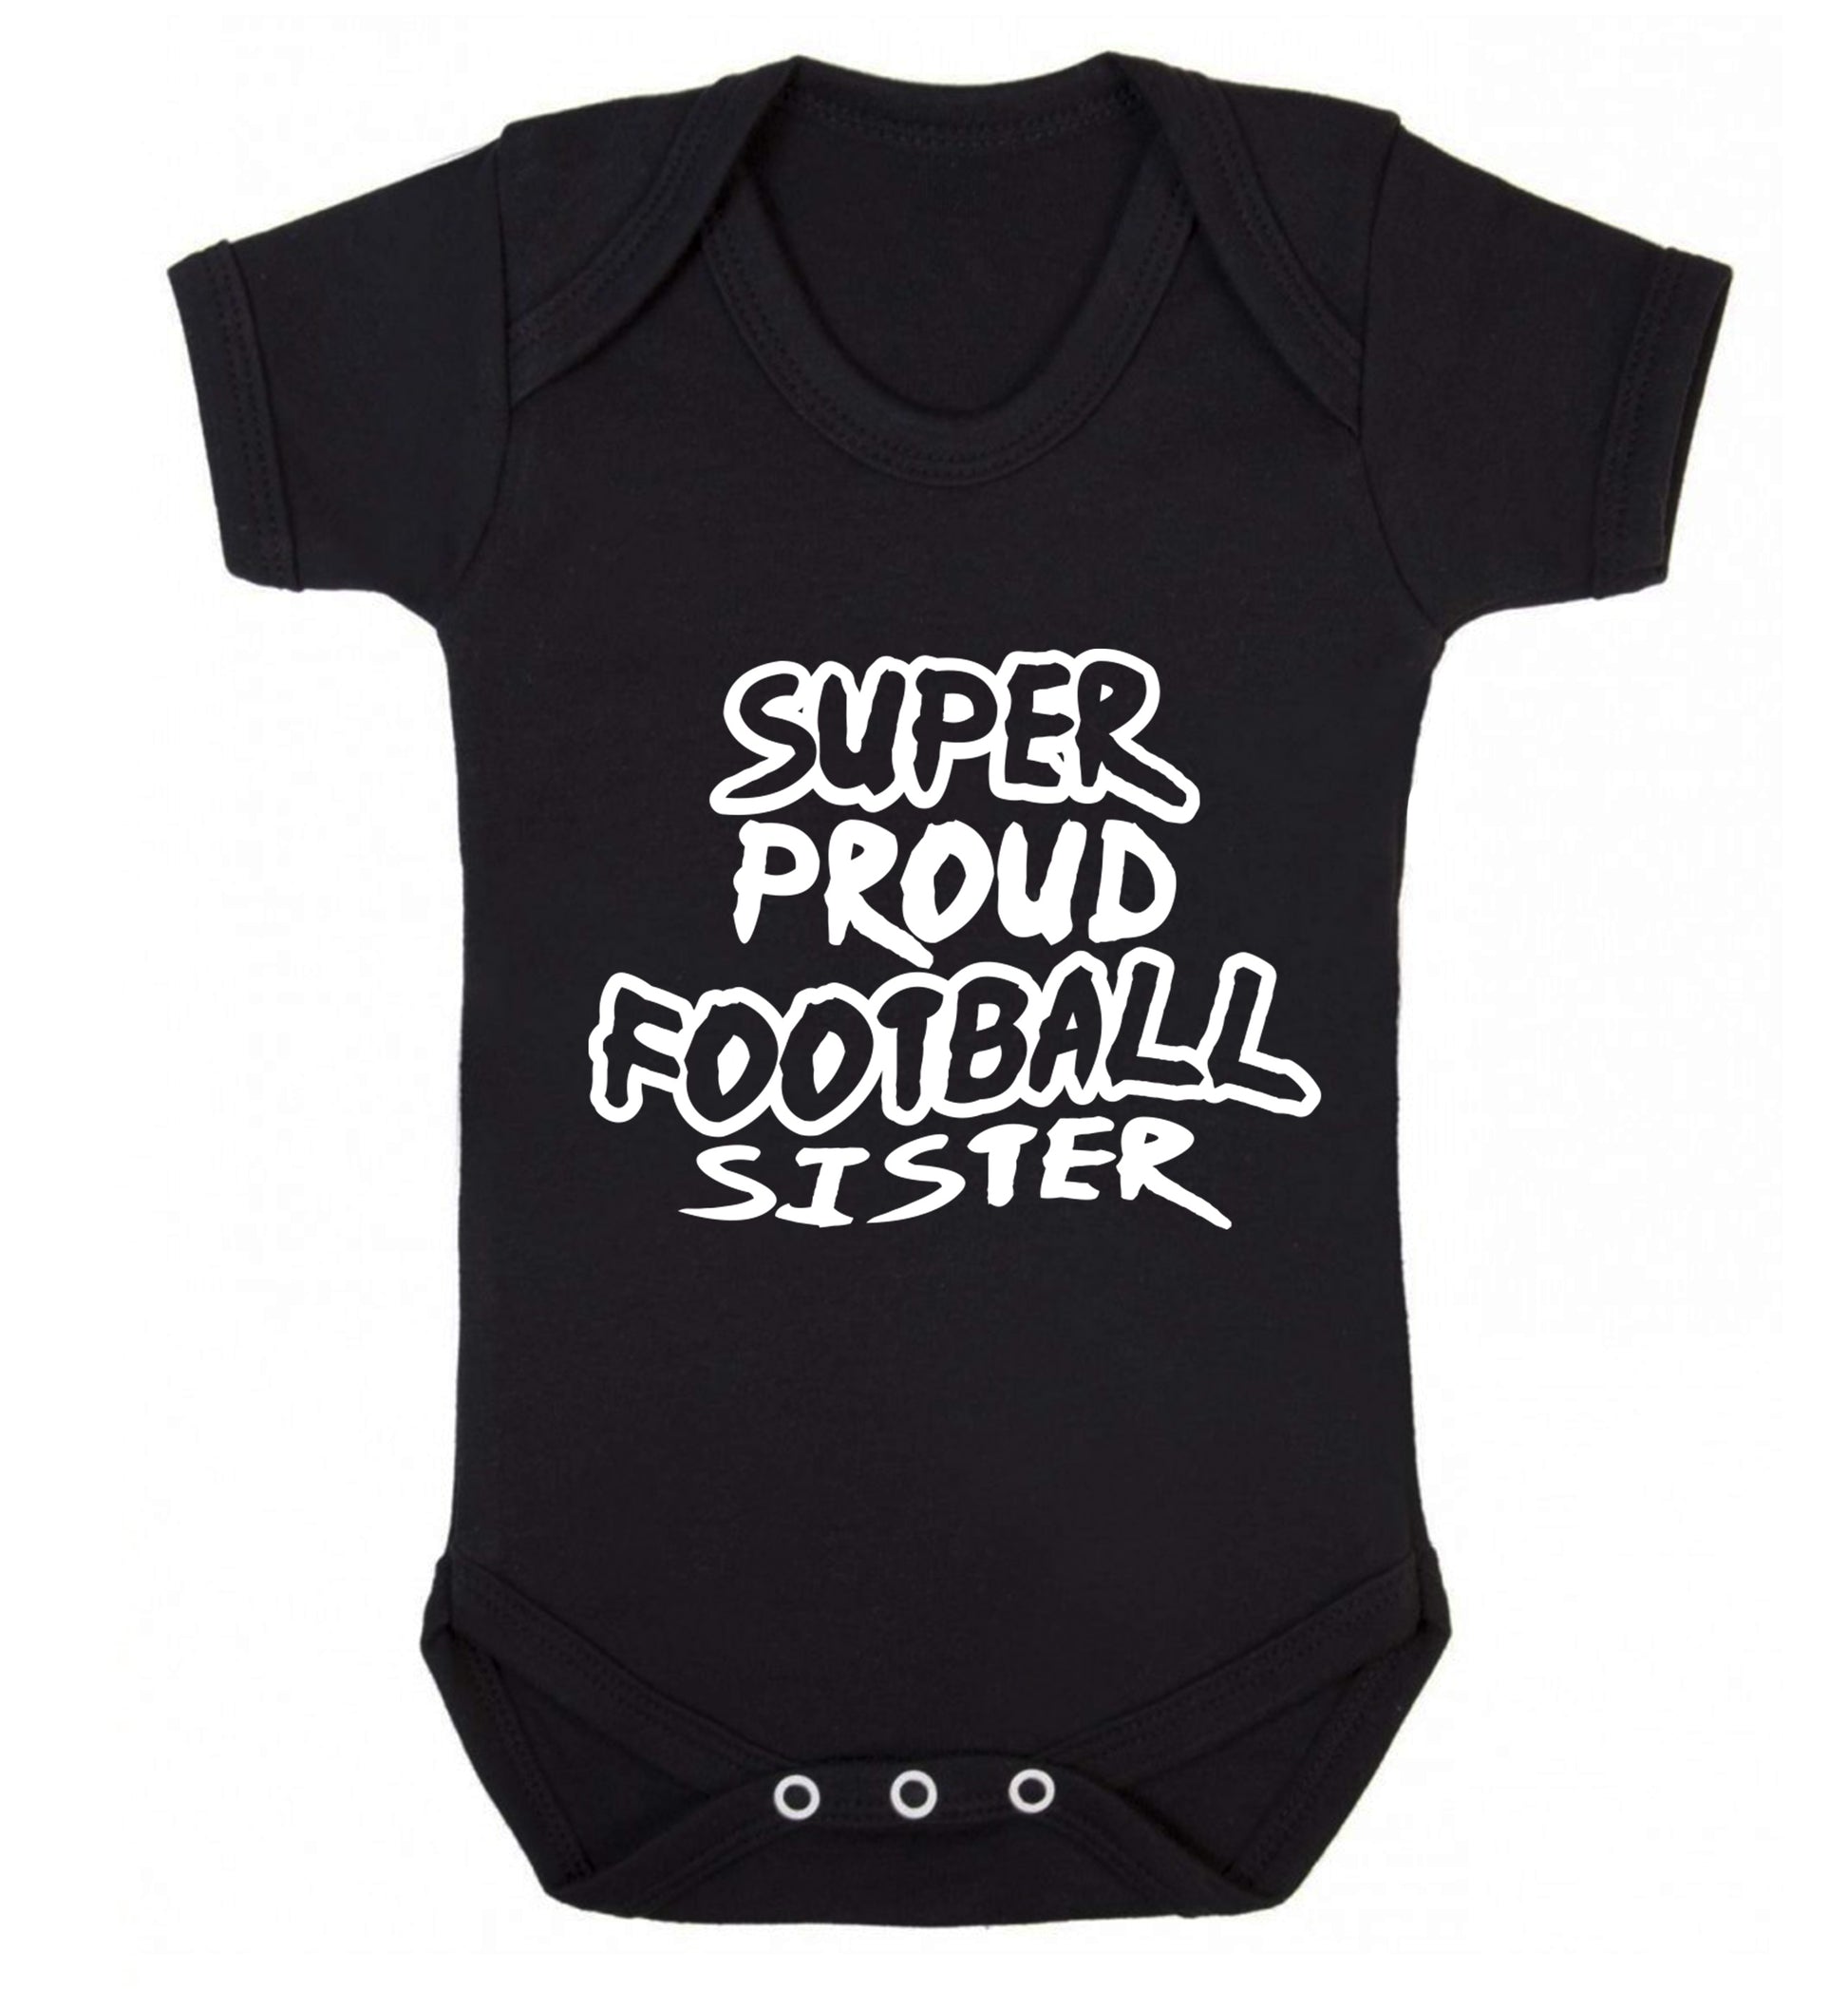 Super proud football sister Baby Vest black 18-24 months